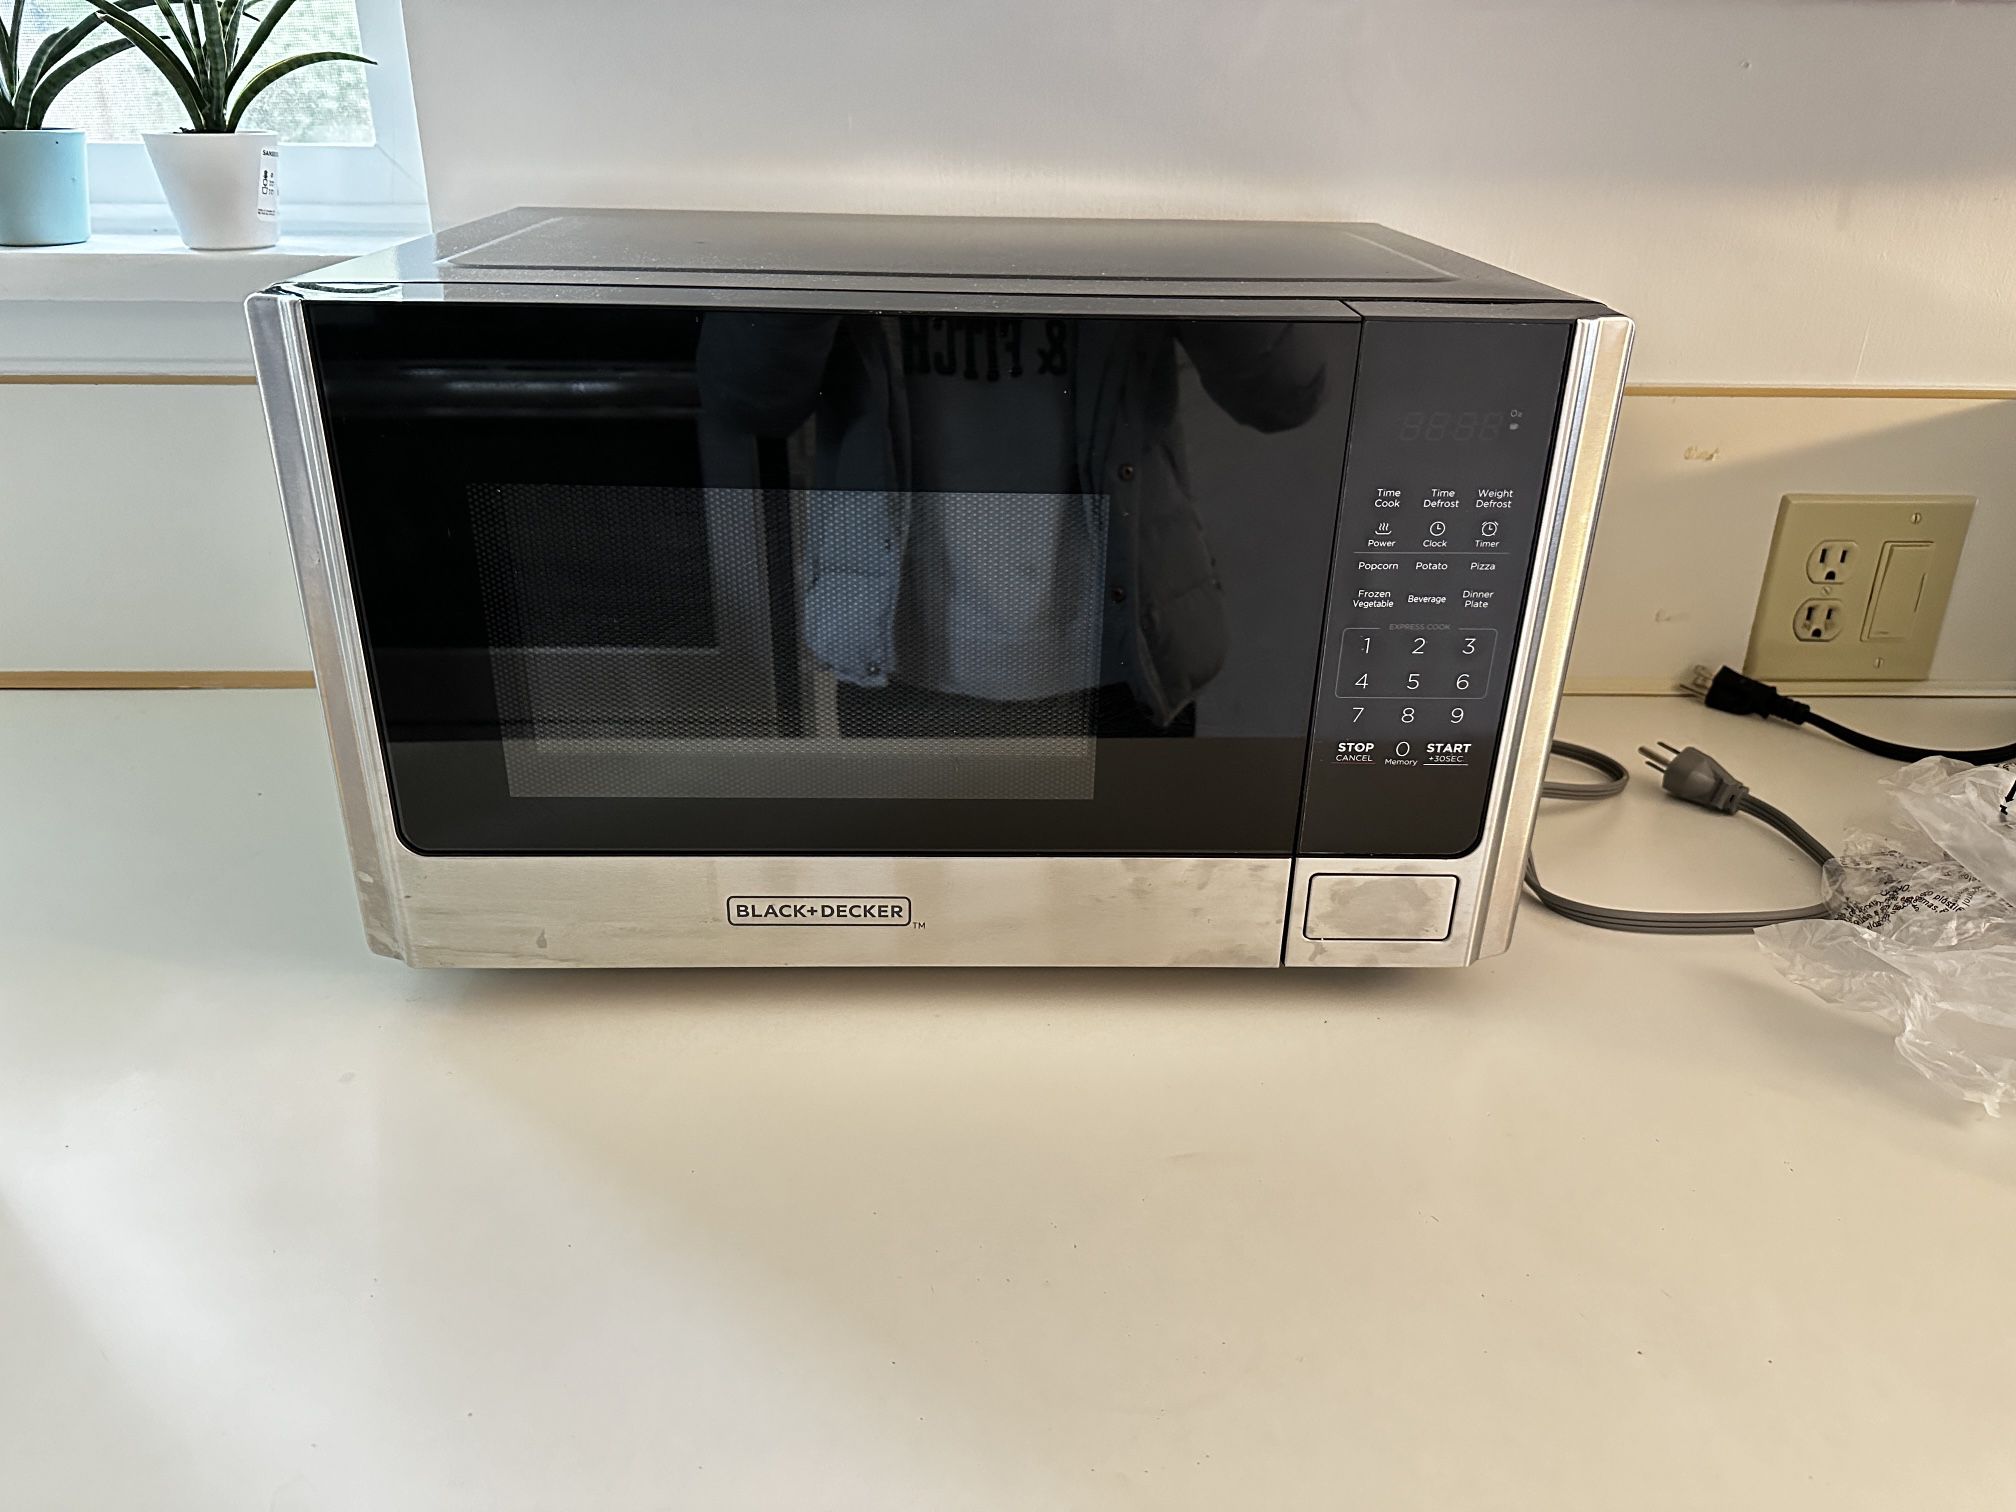 Black + decker microwave